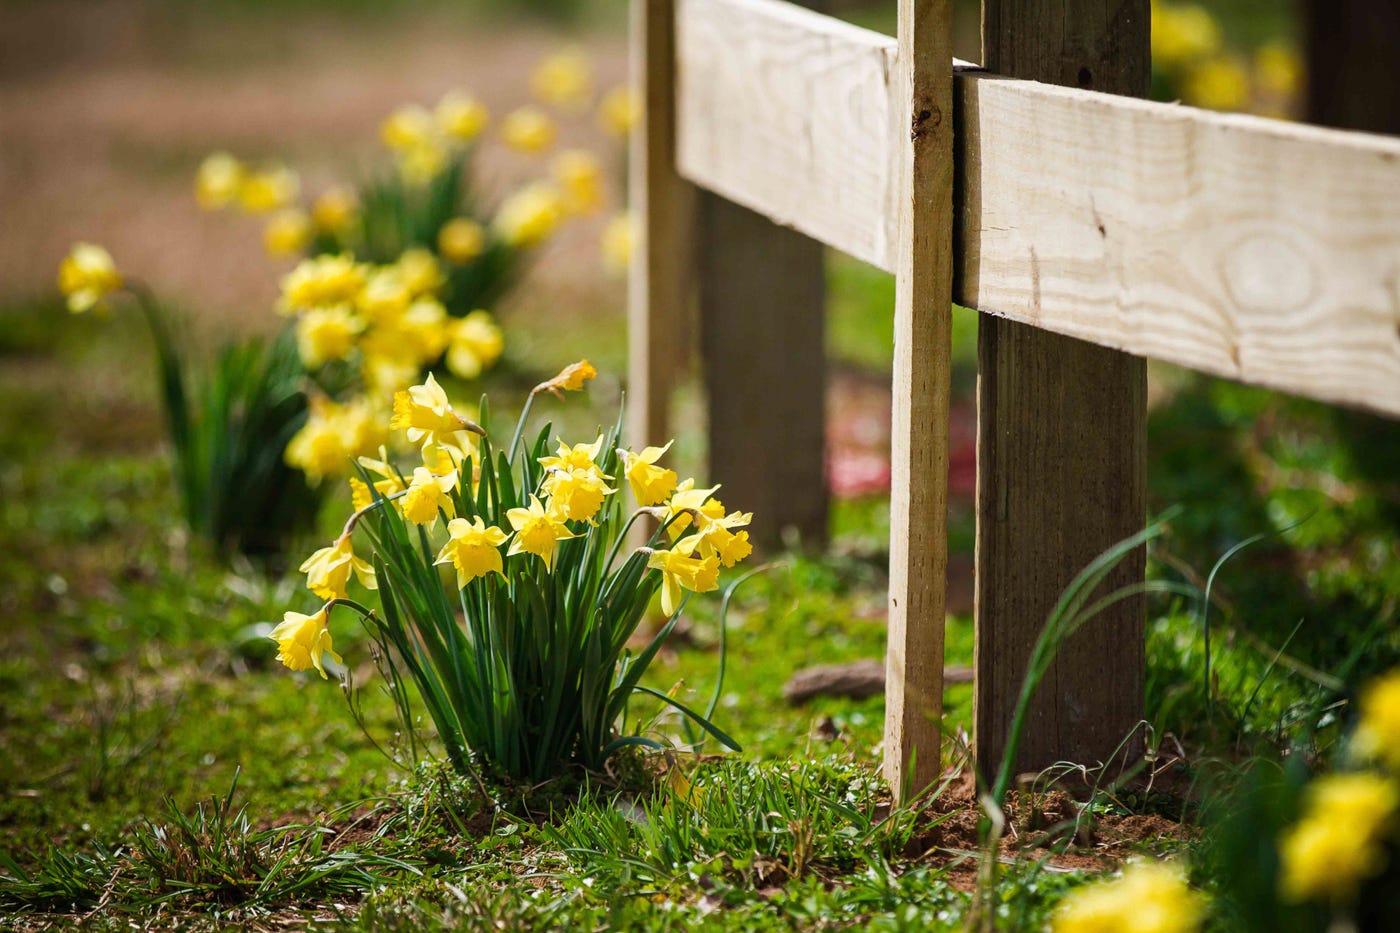 Daffodils at Joey Feek's grave